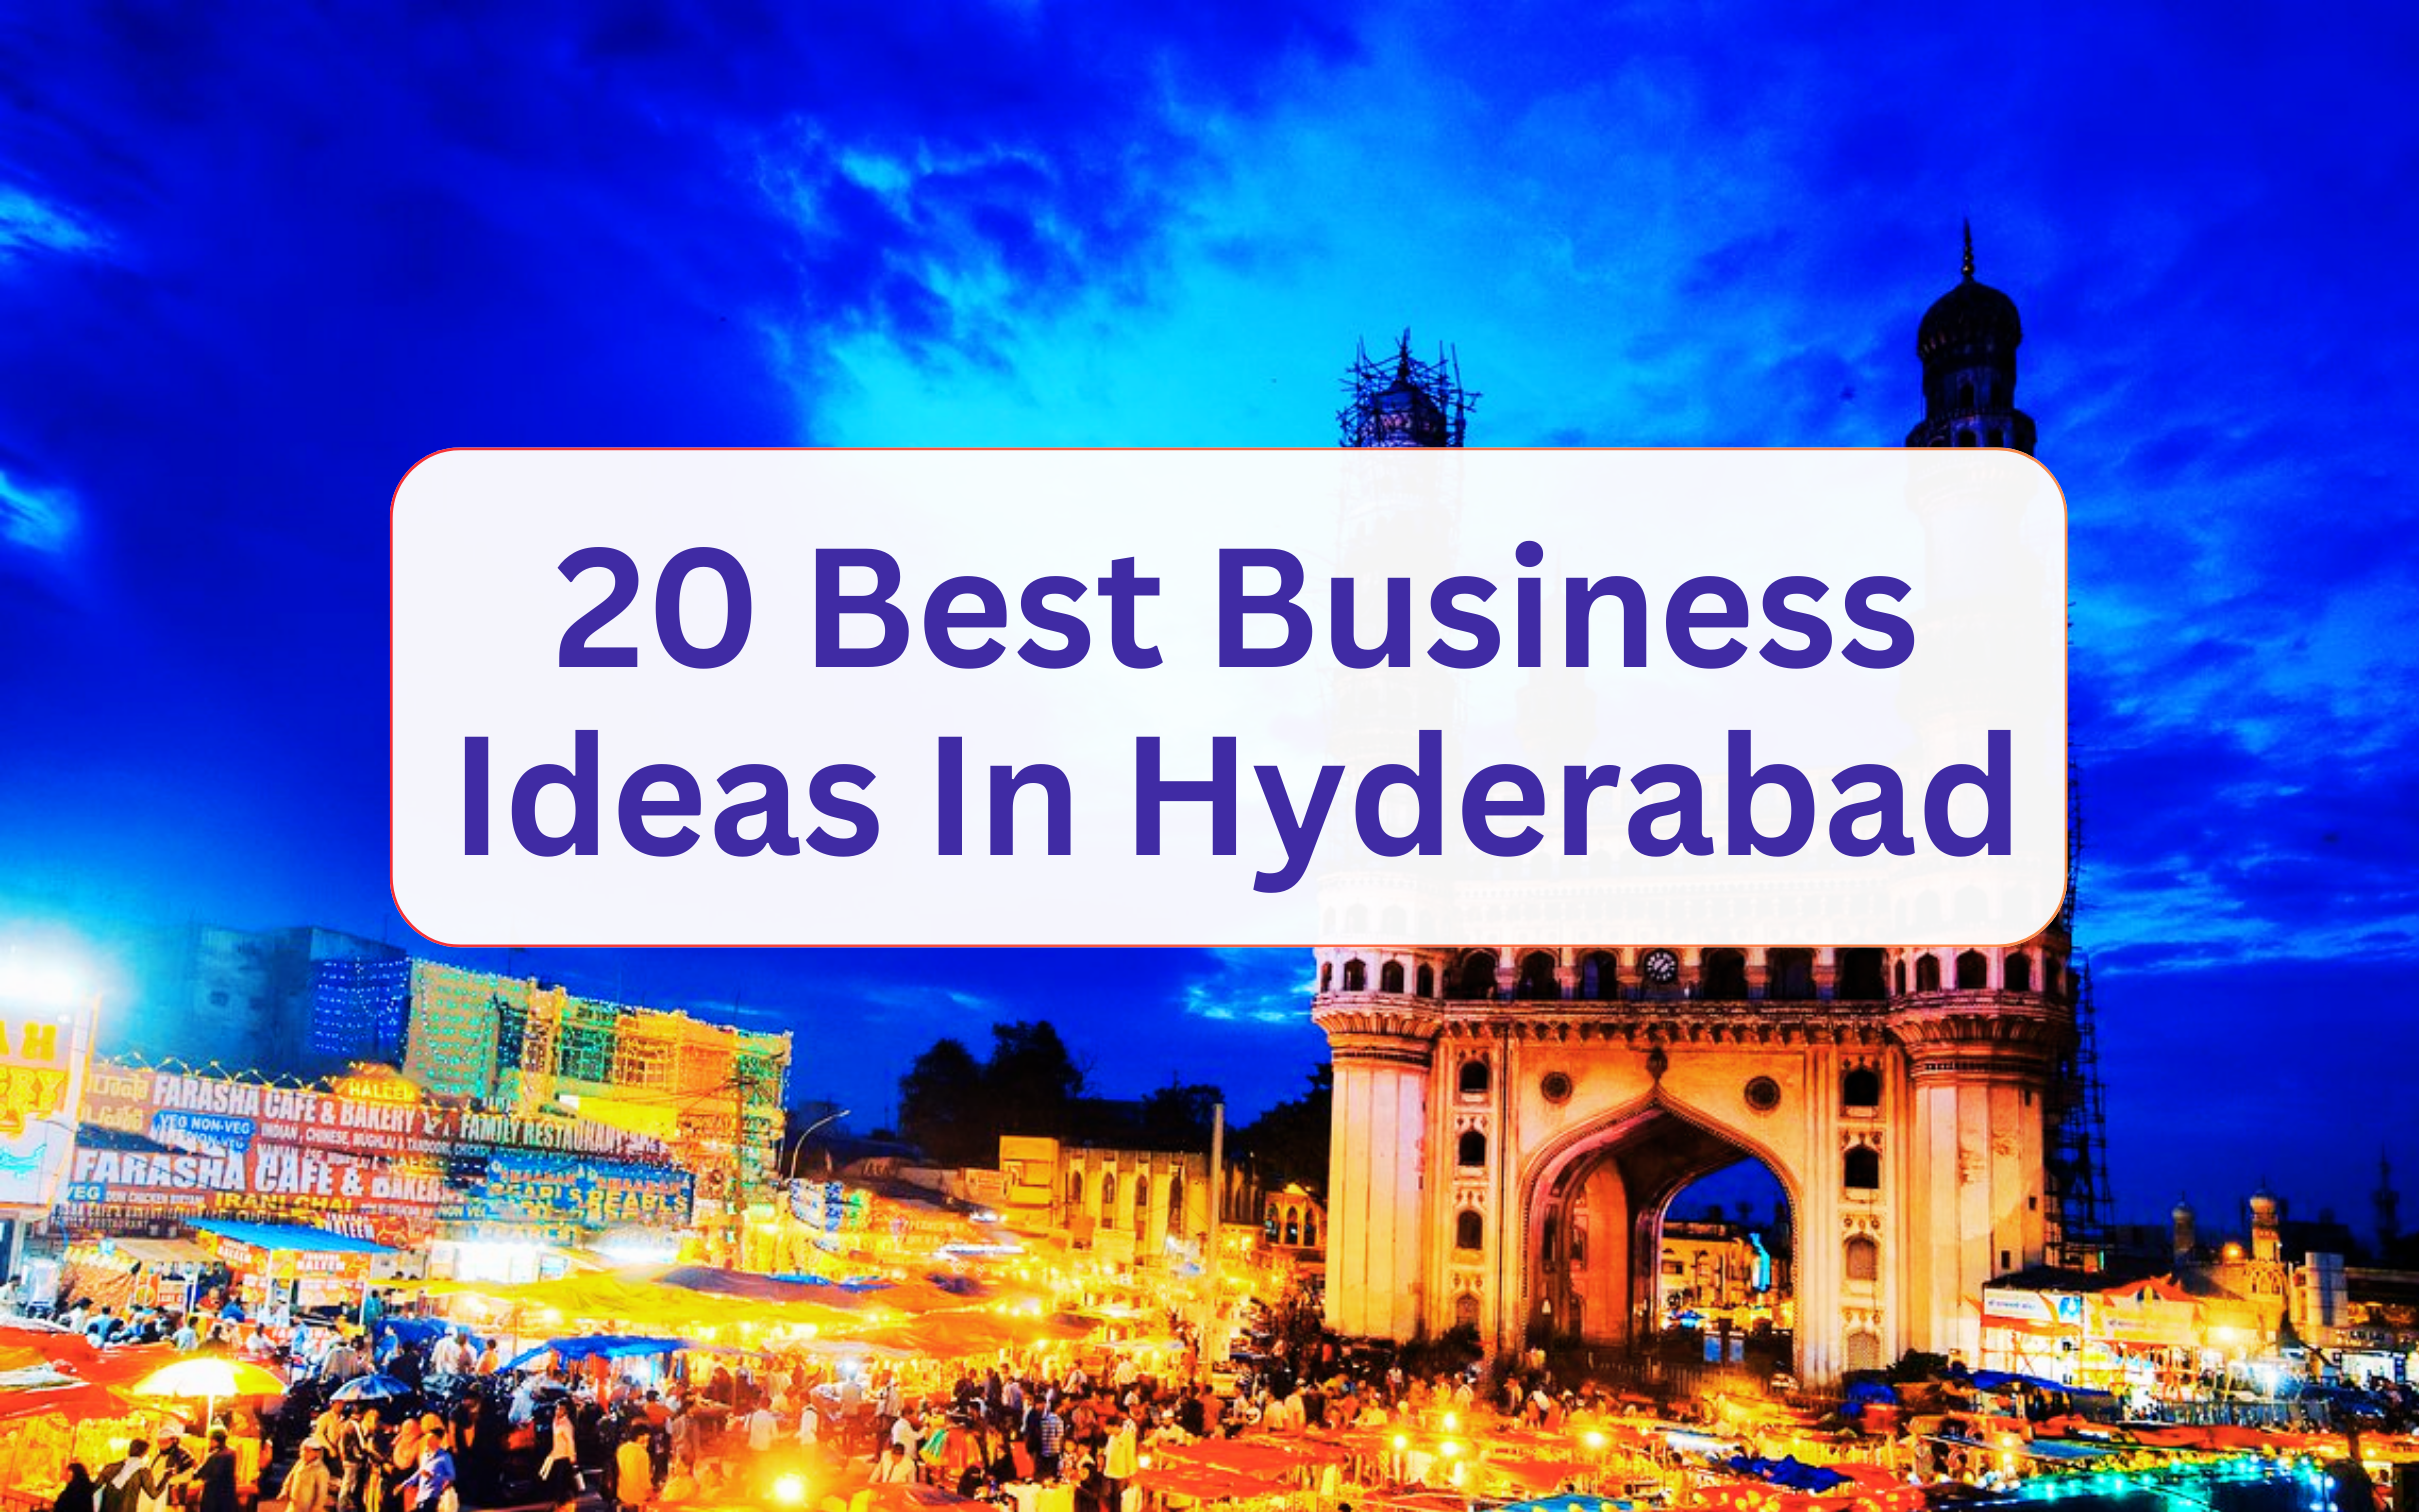 BUSINESS IDEAS IN HYDERABAD